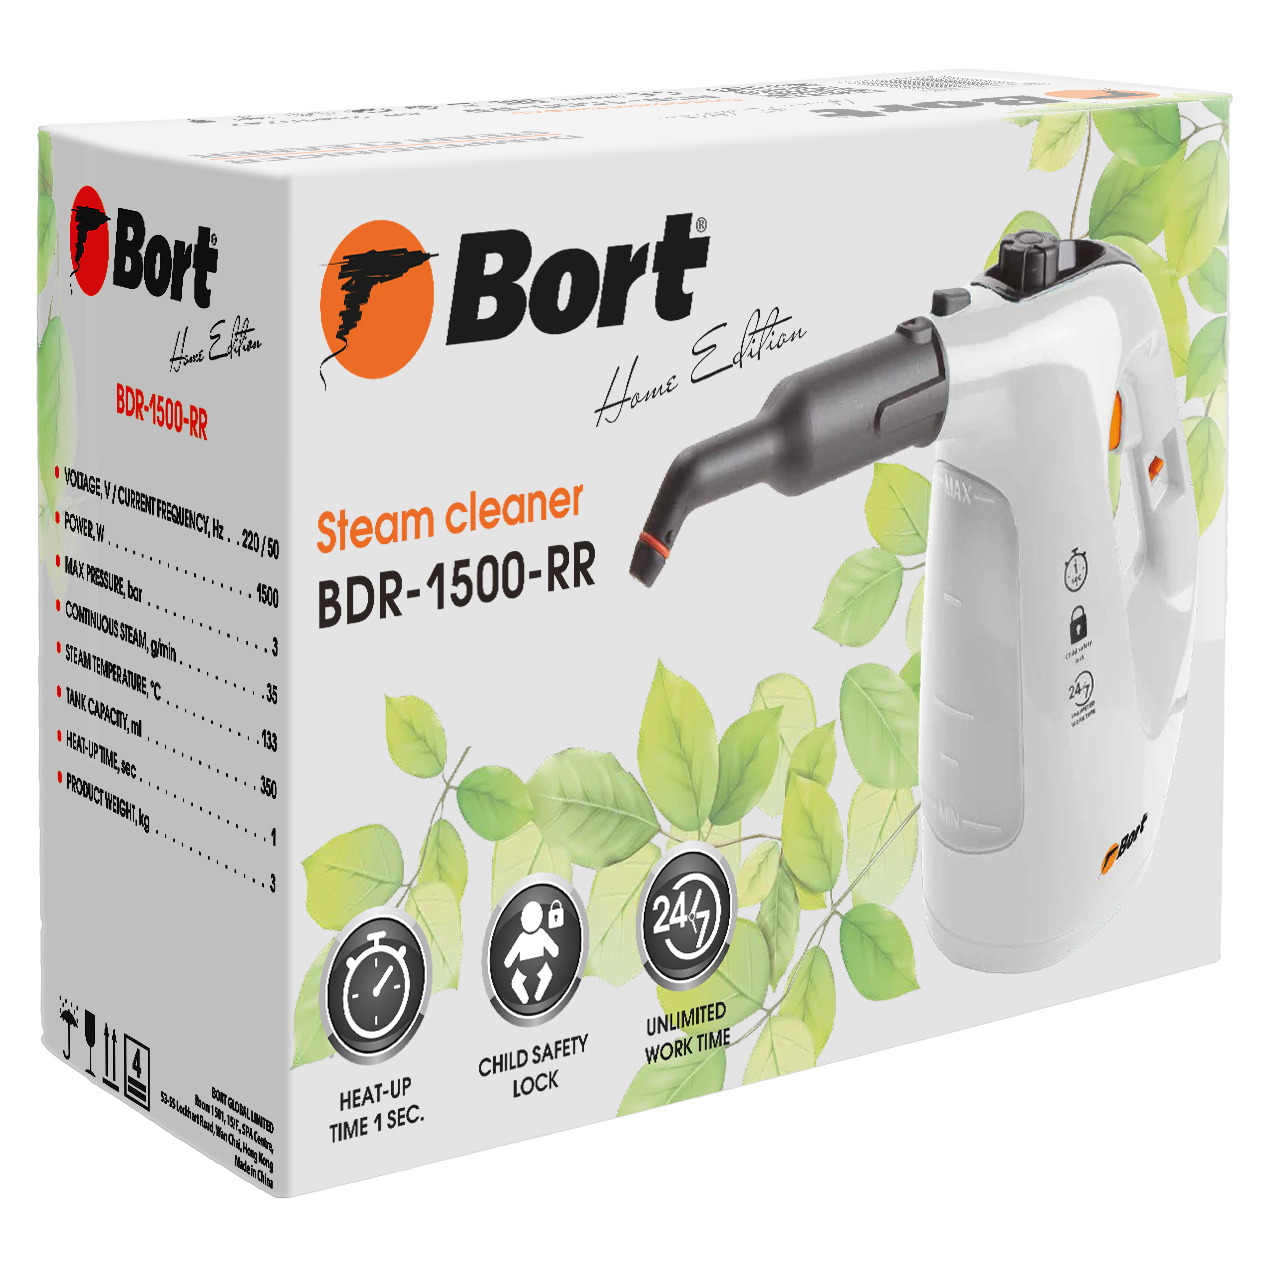 STEAM CLEANER BORT BDR-1500-RR